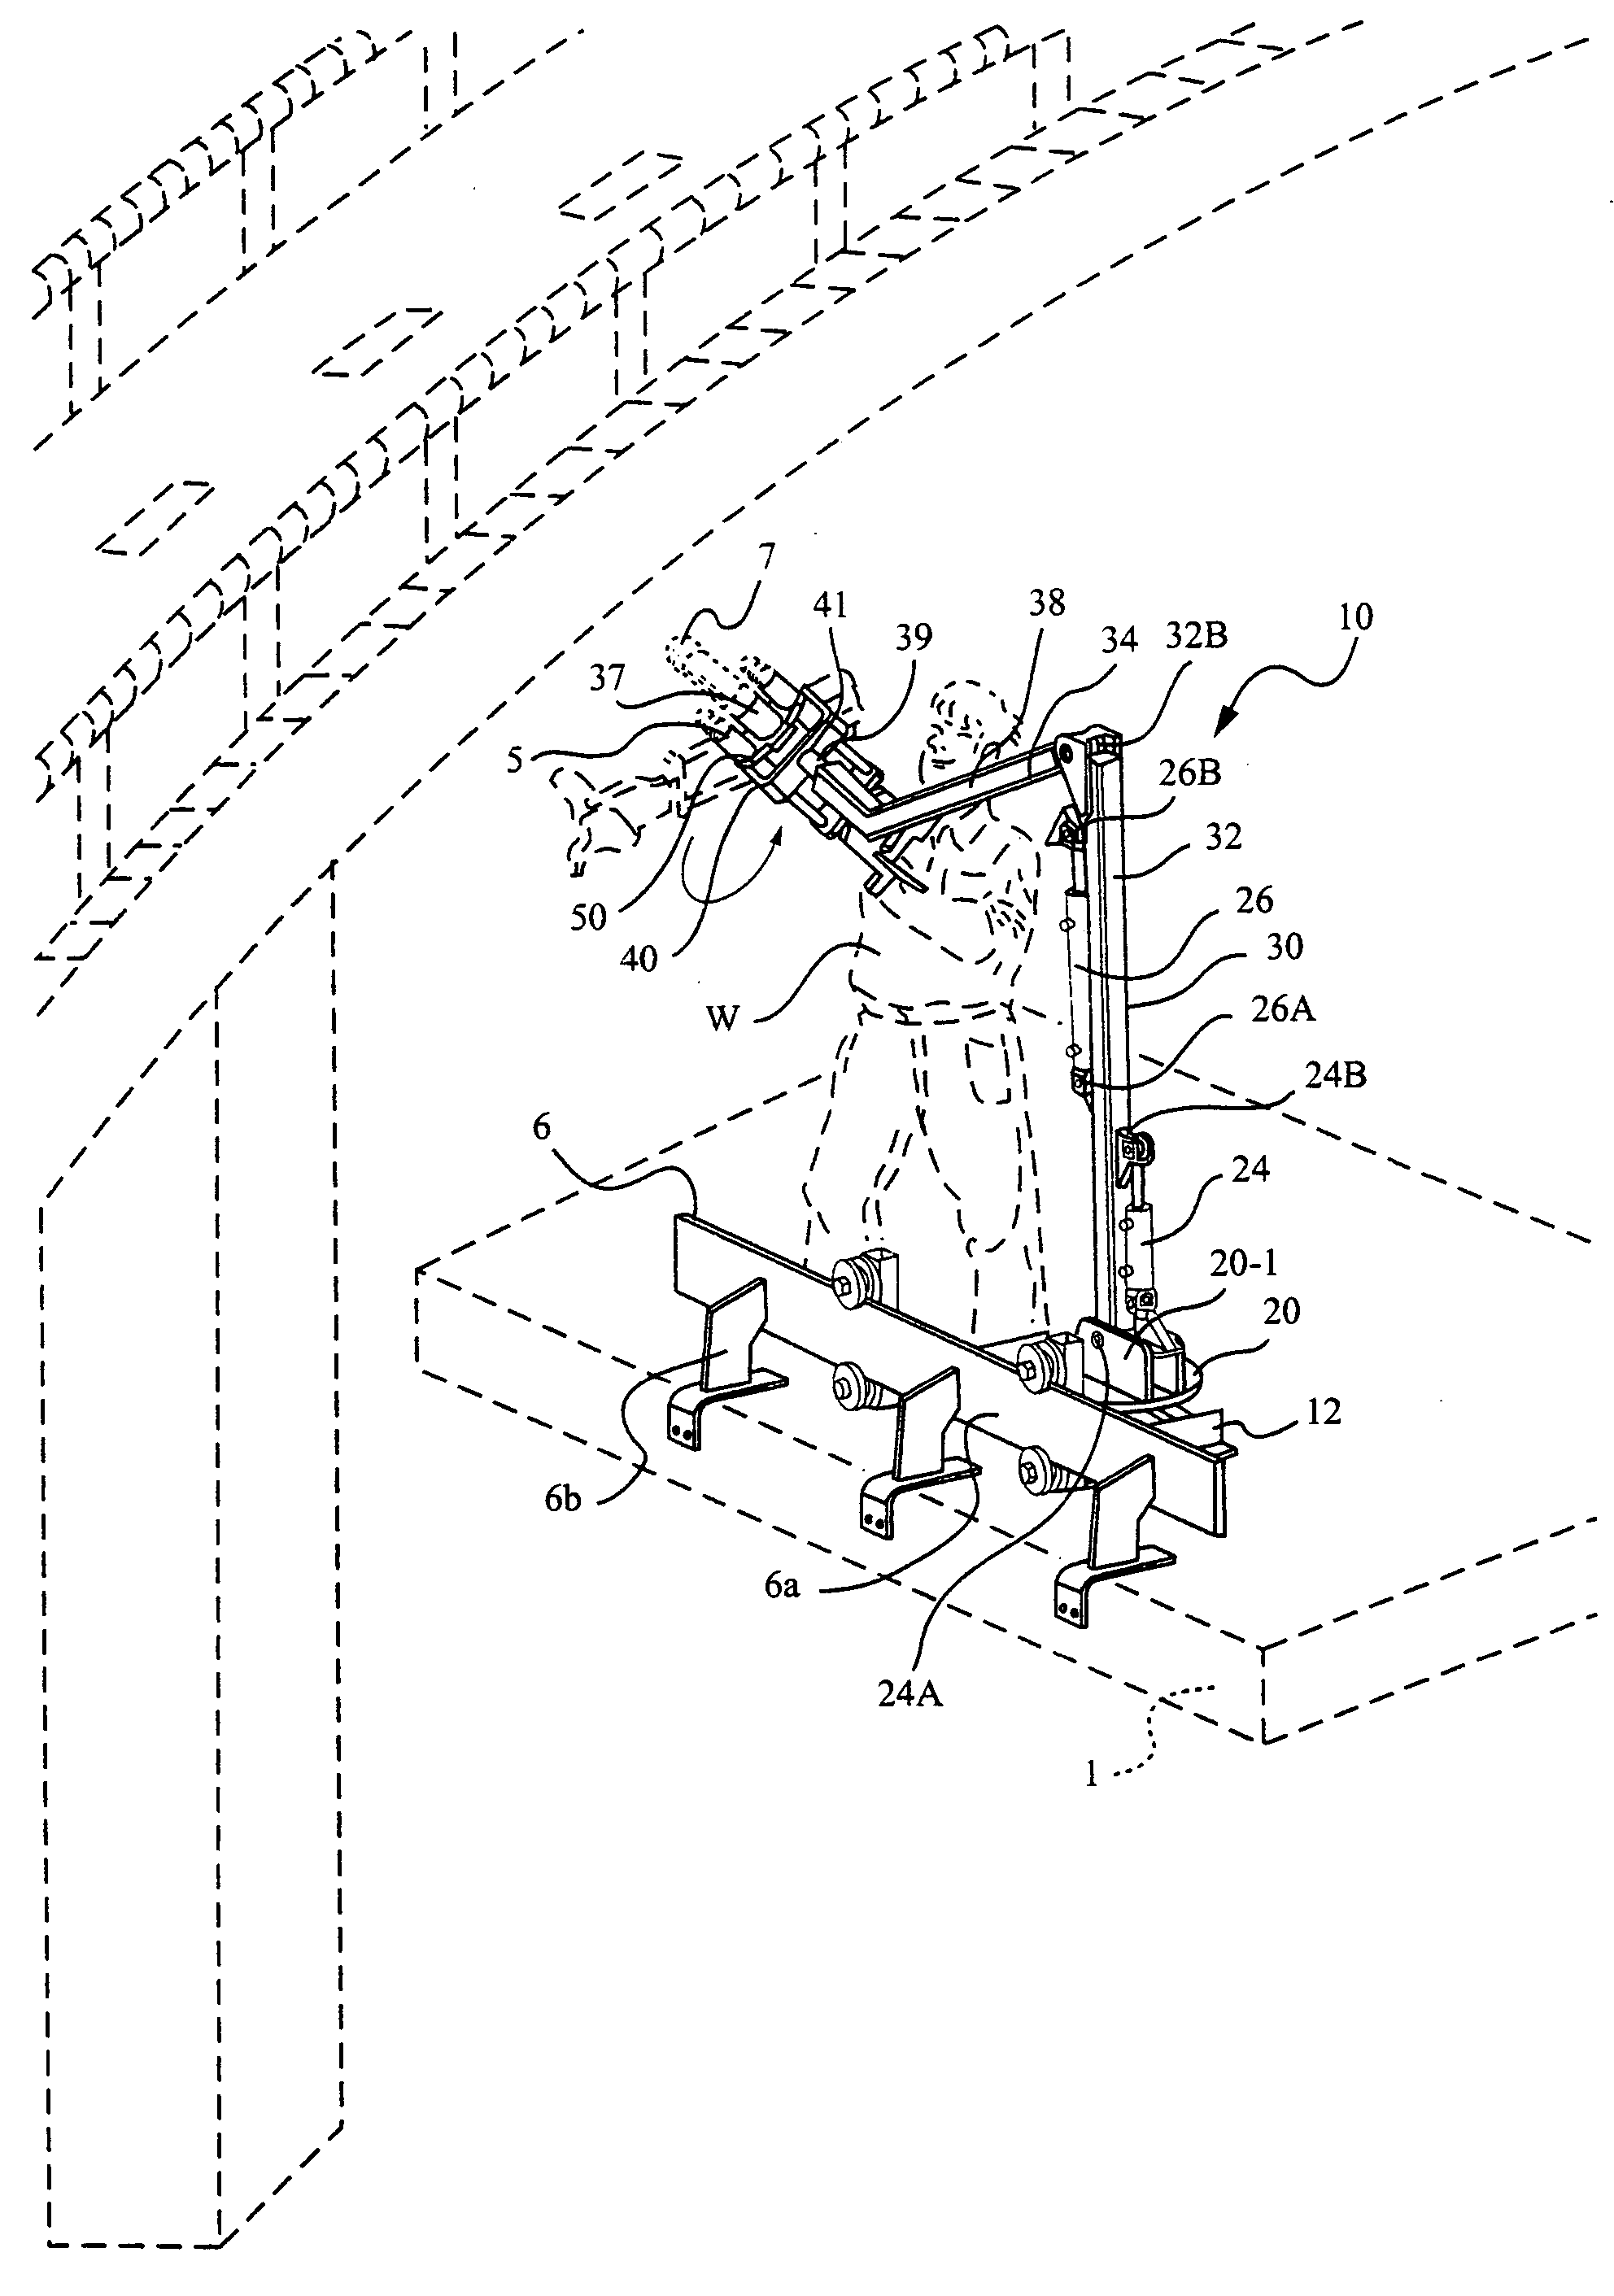 Power-assisted multidirectional jackhammer positioner